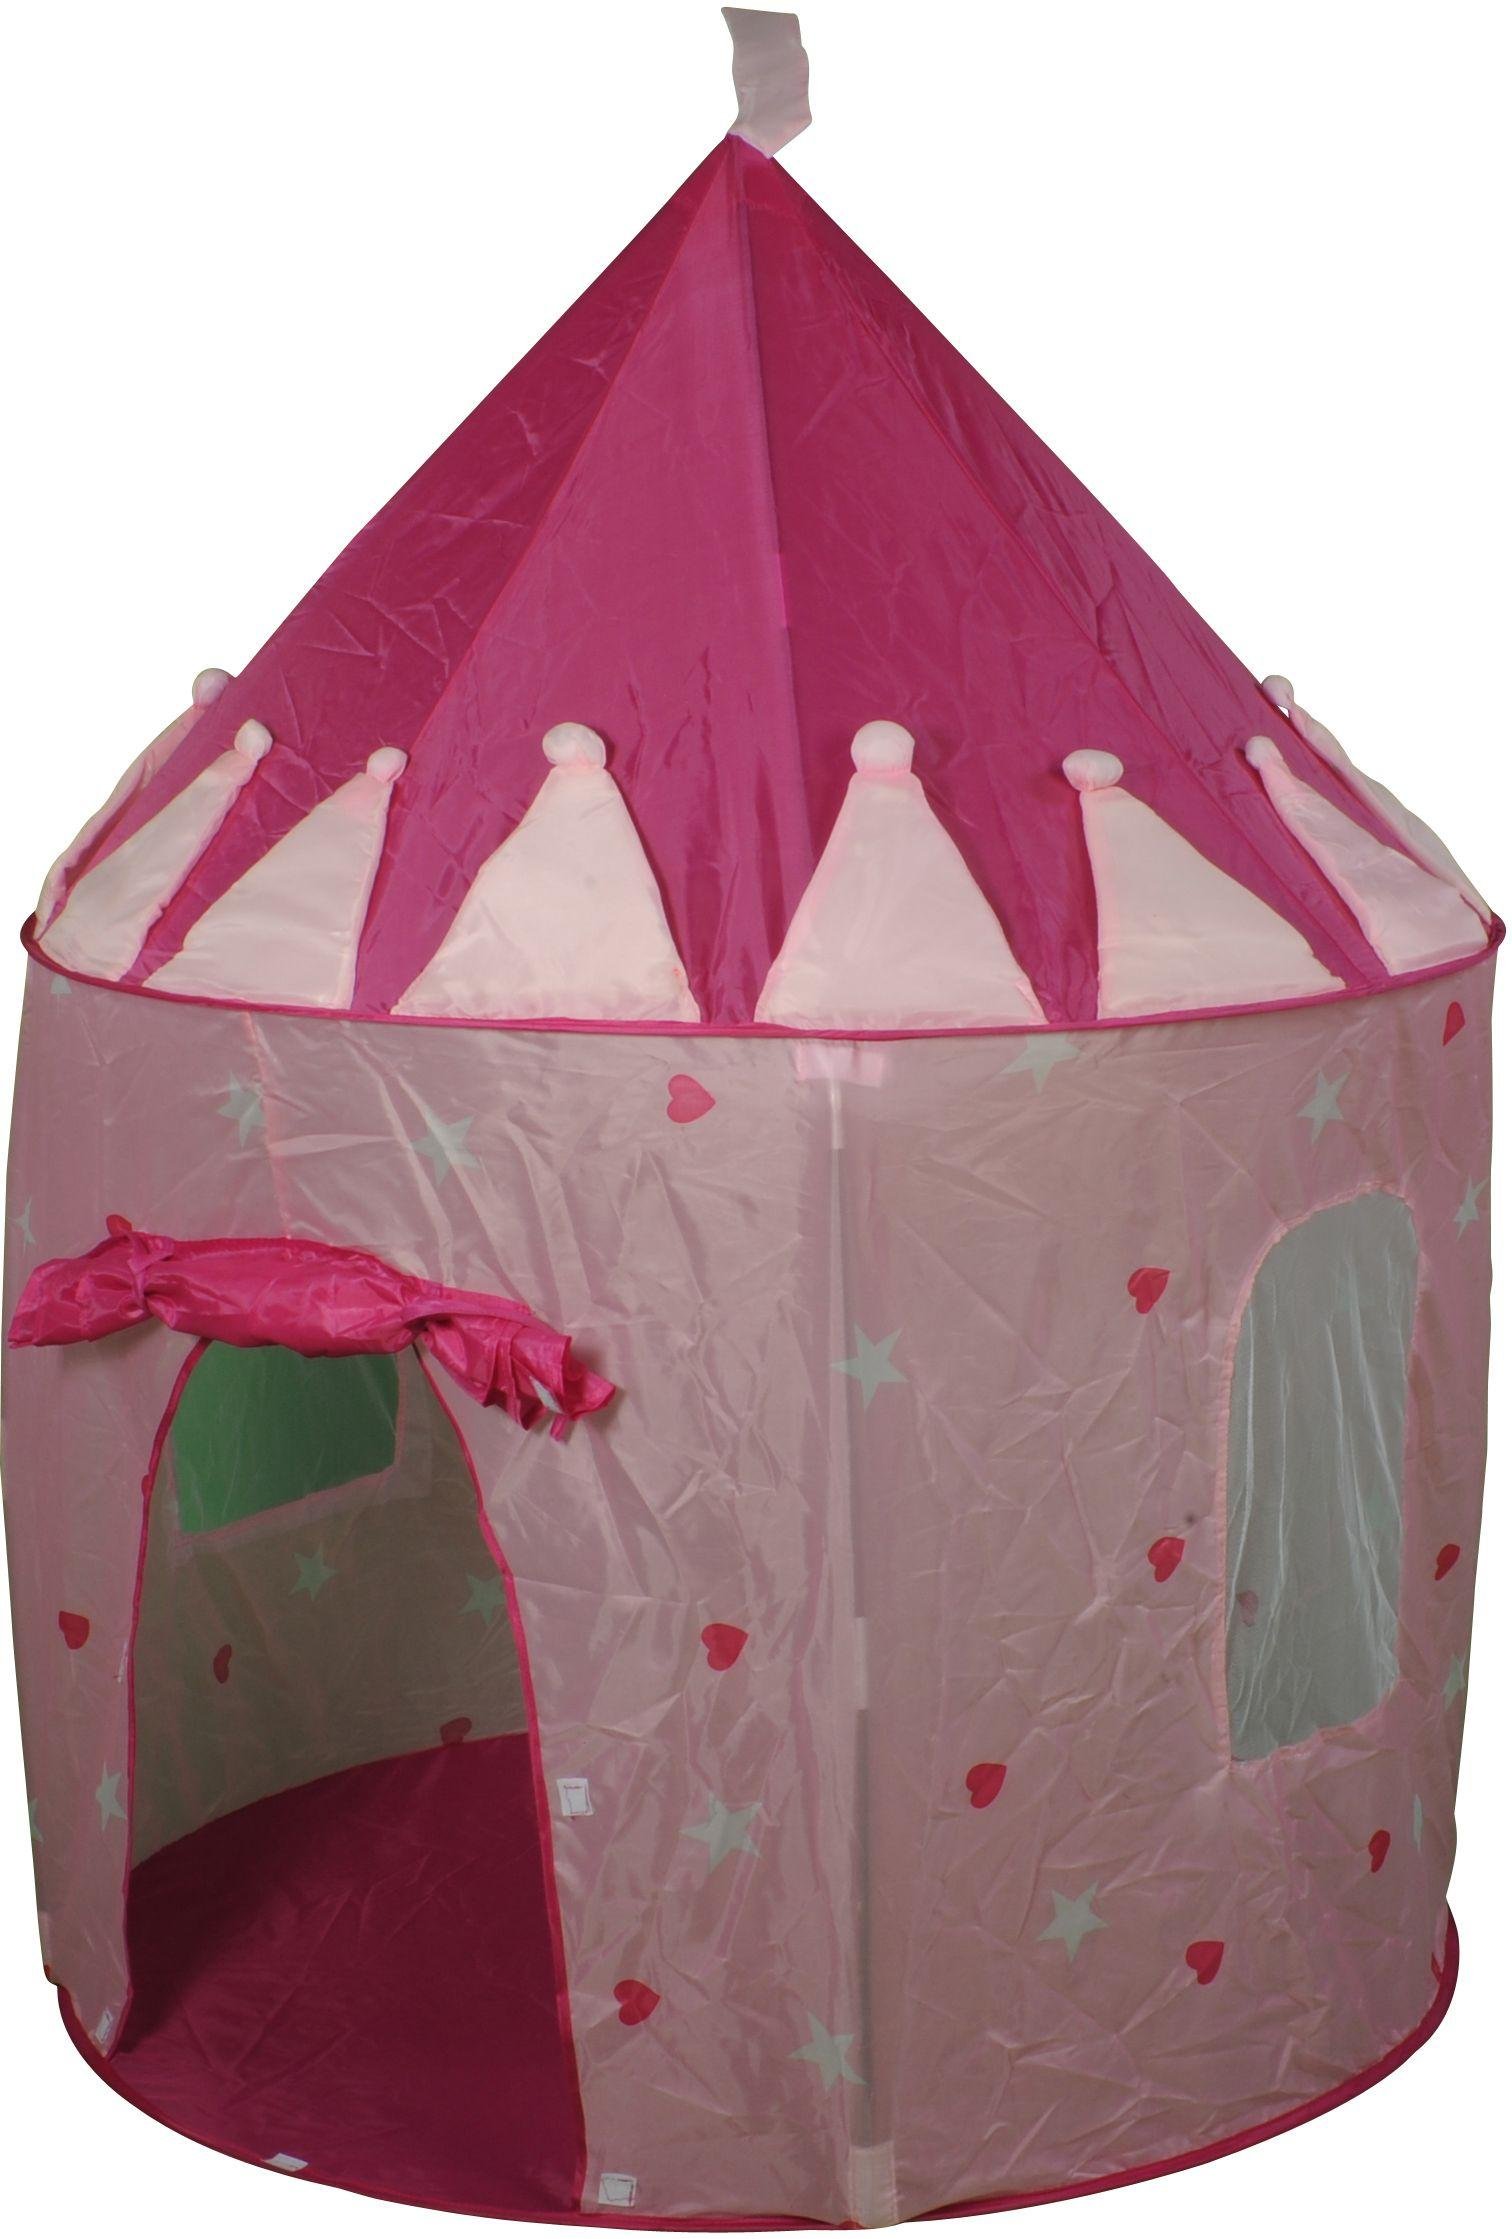 BuitenSpeel Princess Tent